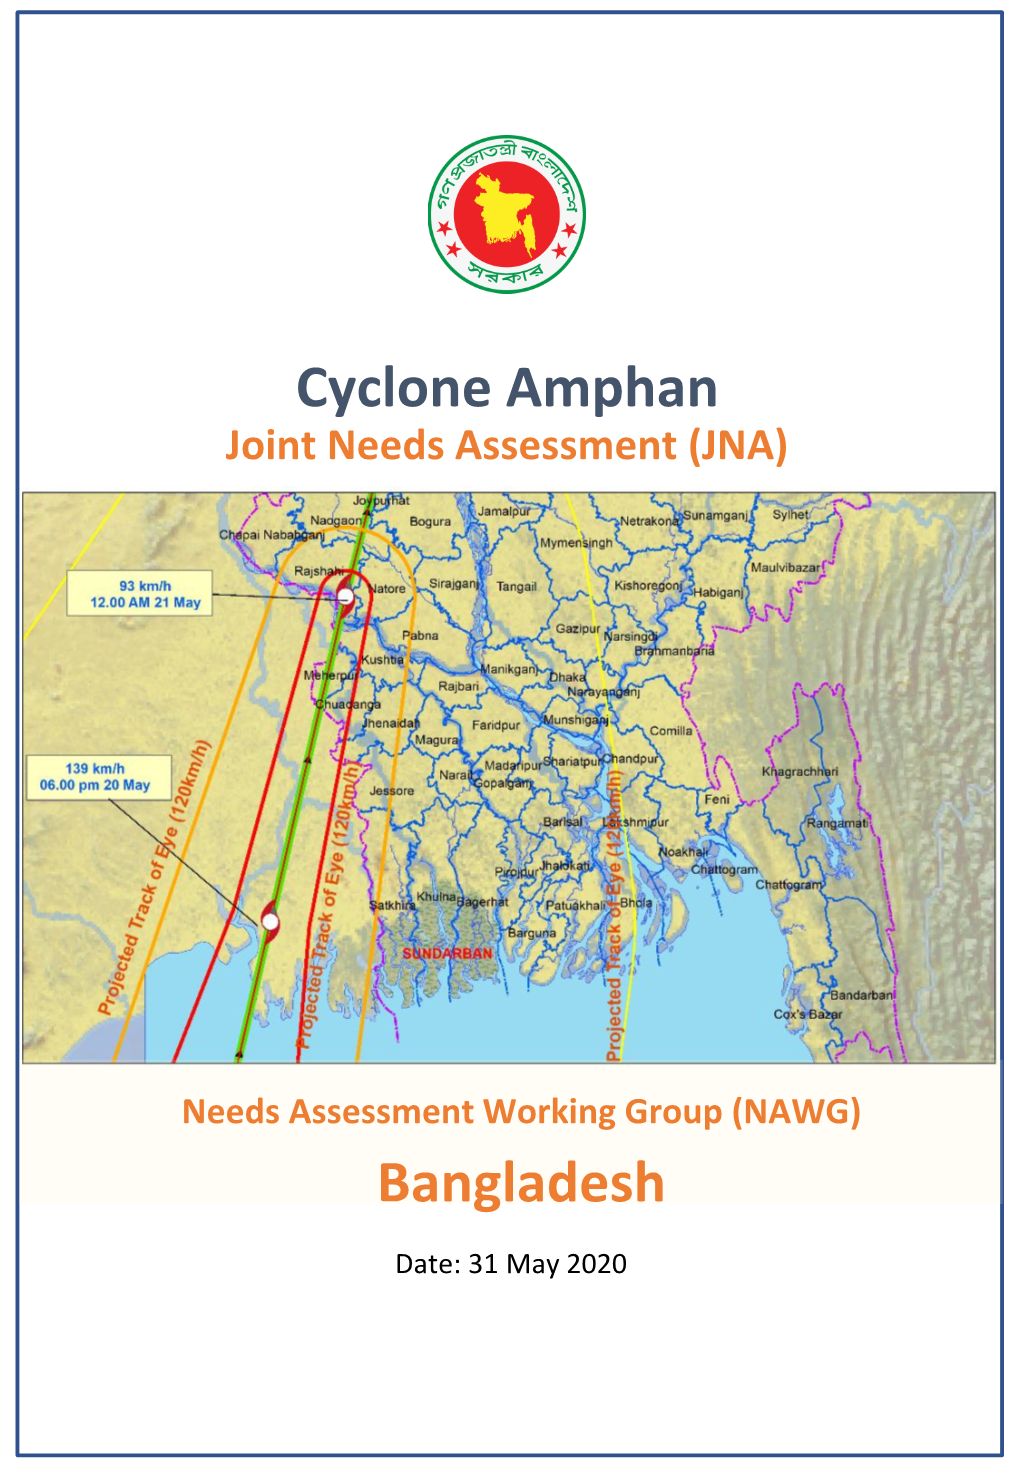 BANGLADESH Cyclone Amphan: Joint Needs Assessment